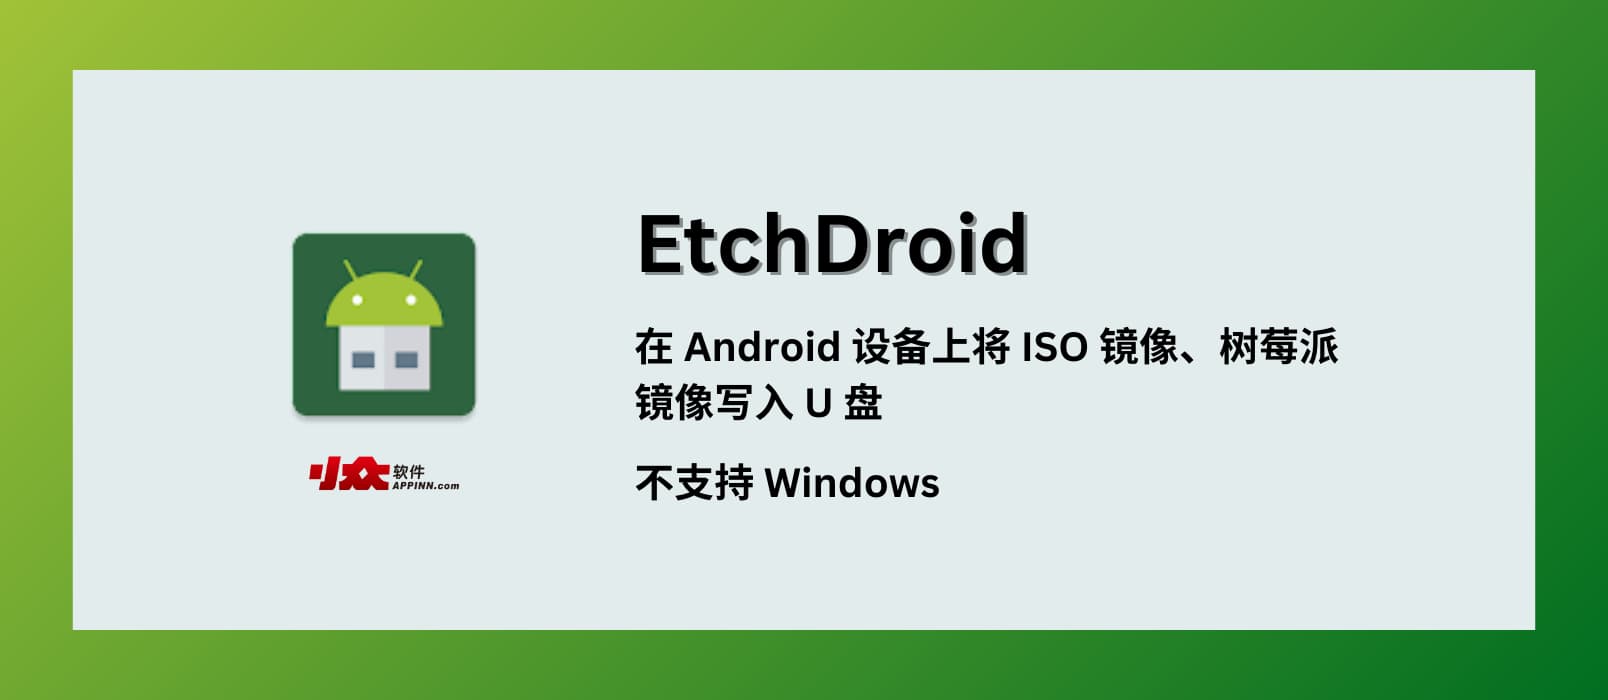 EtchDroid - 在 Android 设备上将 ISO 和 DMG 镜像、树莓派镜像写入 U 盘